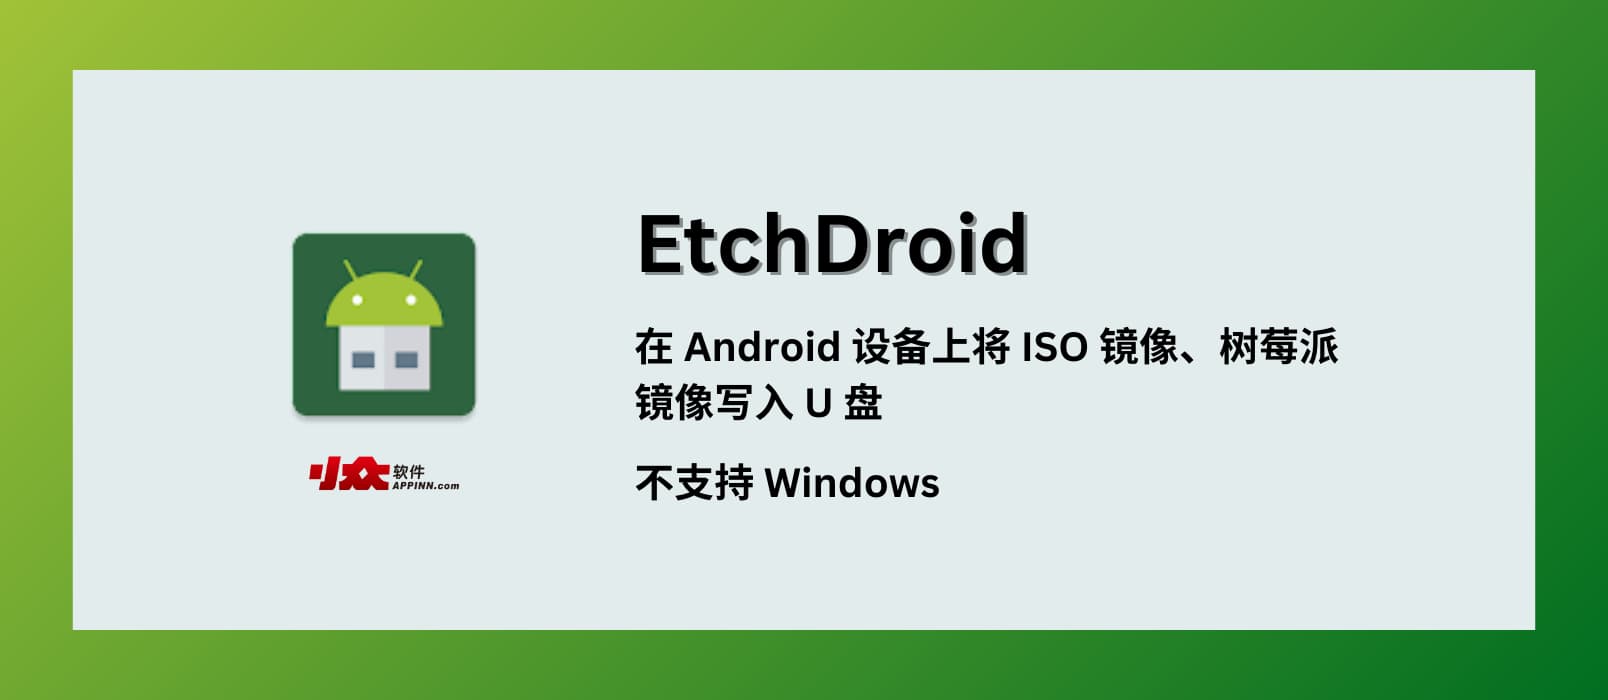 EtchDroid - 在 Android 设备上将 ISO 和 DMG 镜像、树莓派镜像写入 U 盘